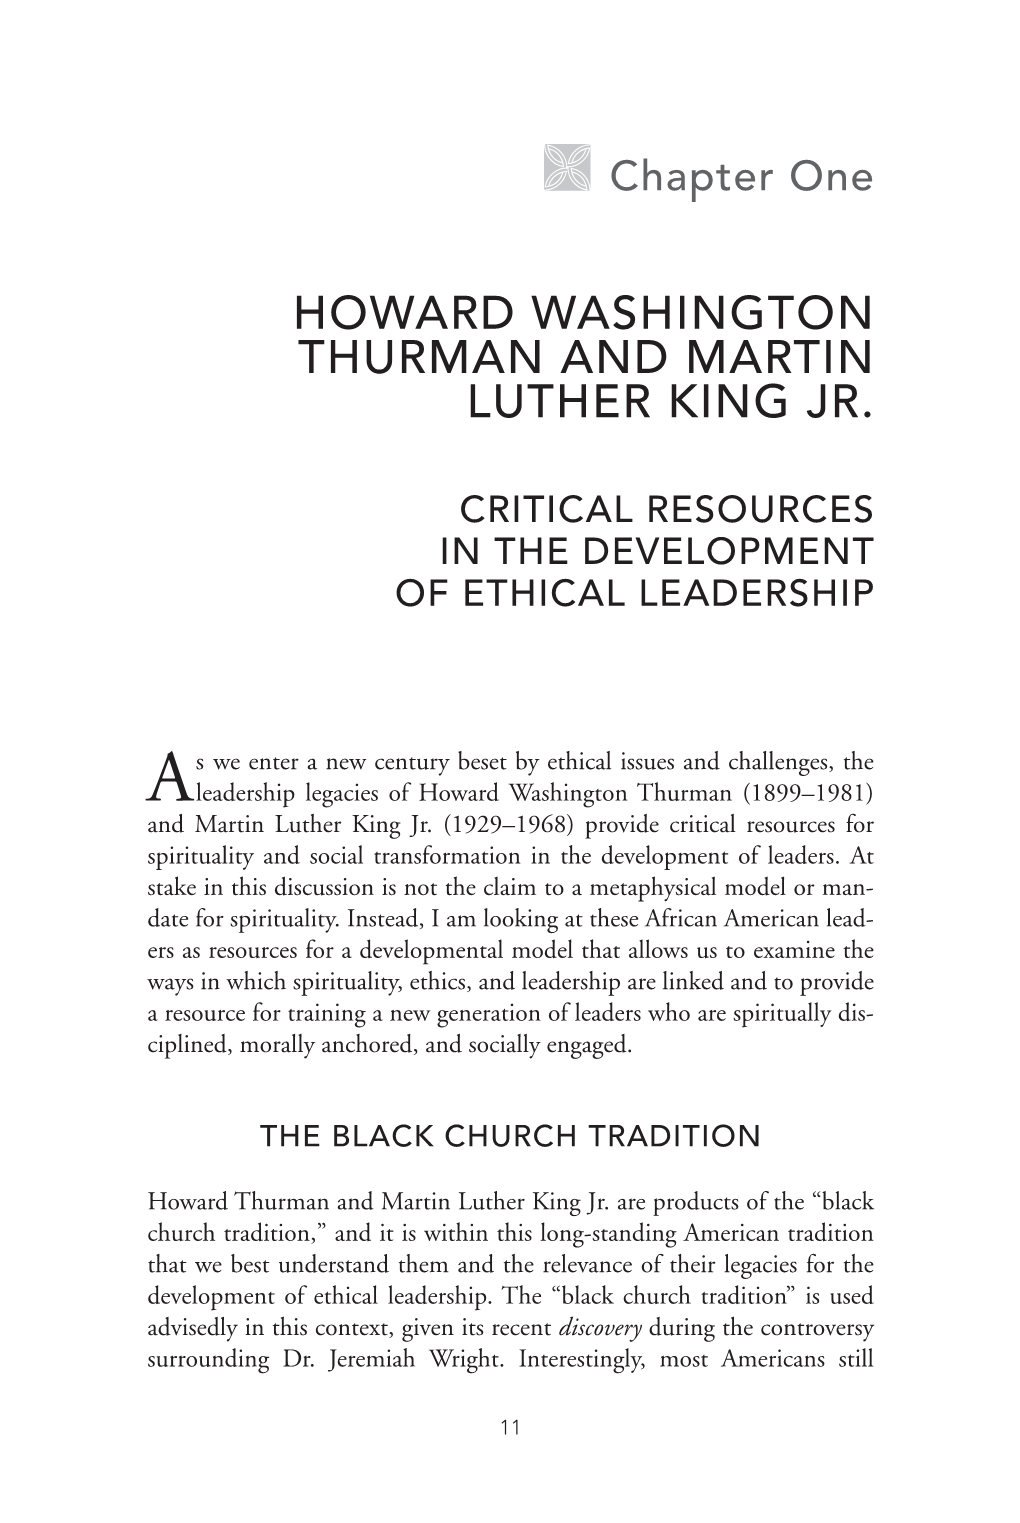 Howard Washington Thurman and Martin Luther King Jr